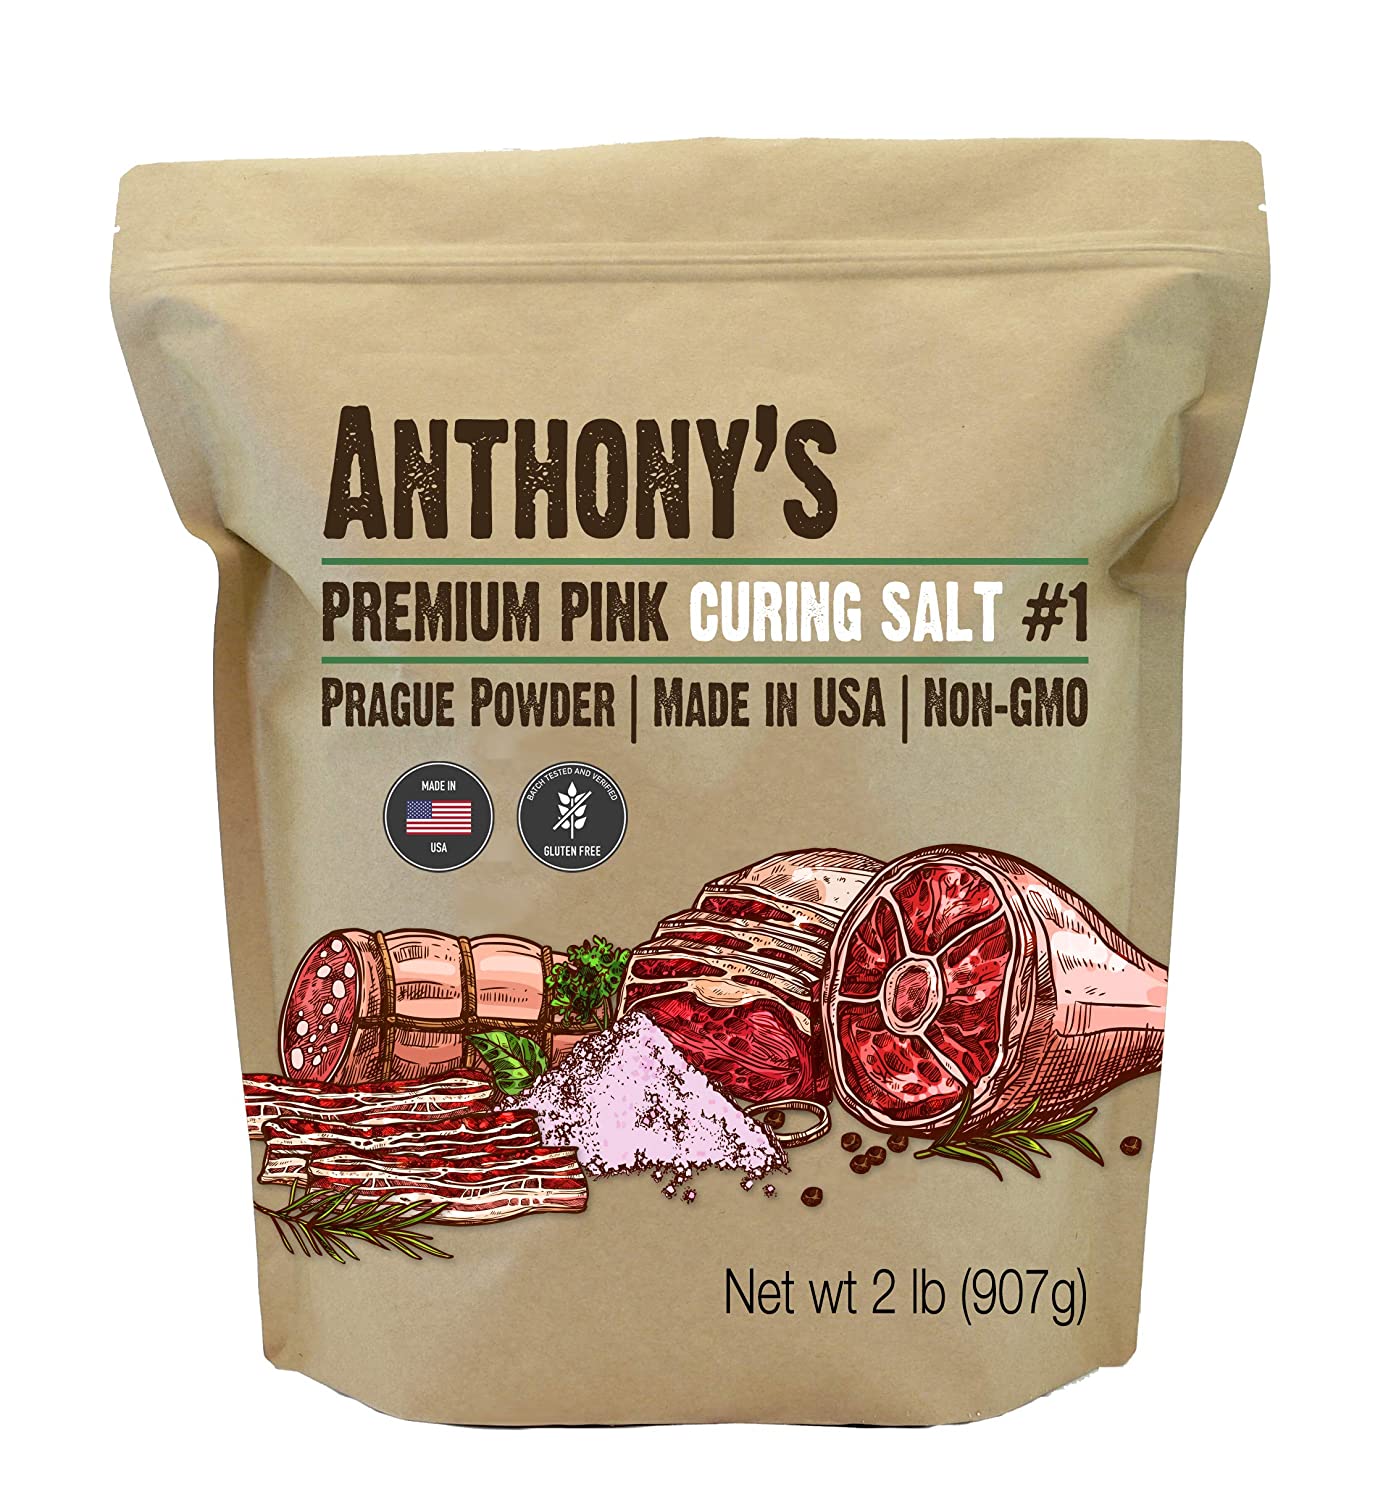 Anthony's Pink Curing Salt #1